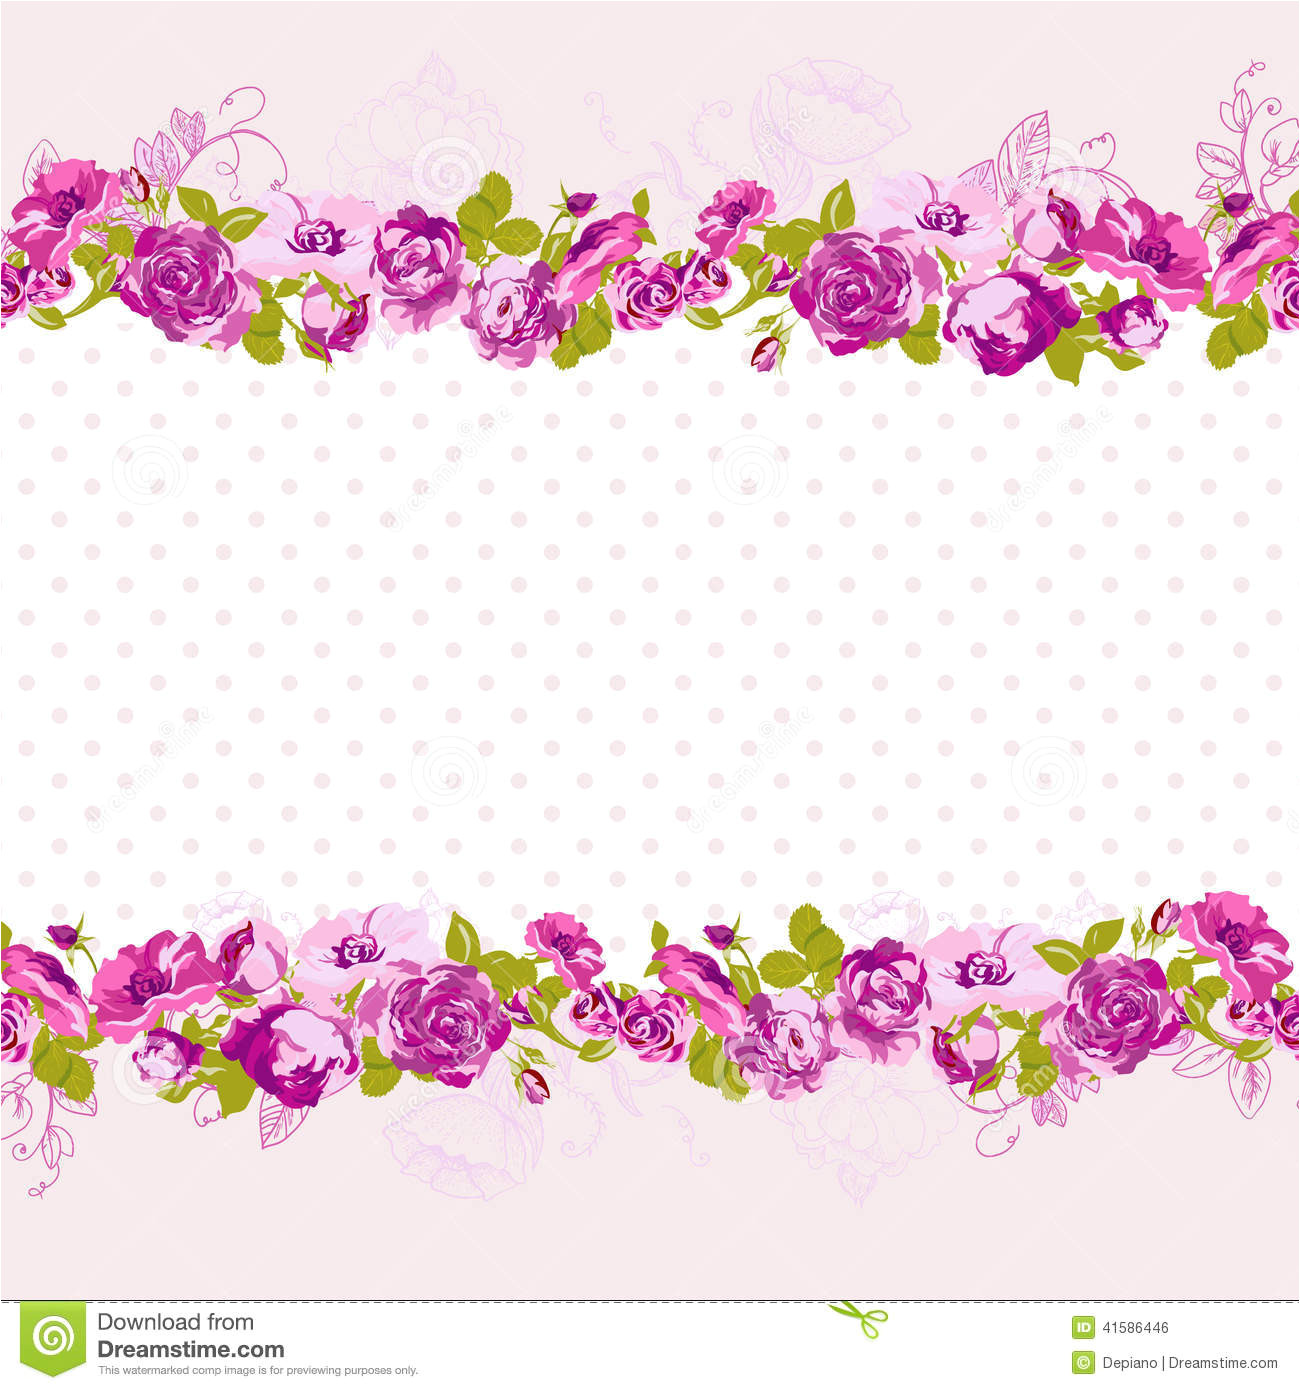 stock illustration seamless border blossom roses vector floral greeting card spring background wedding birthday invitation design image41586446